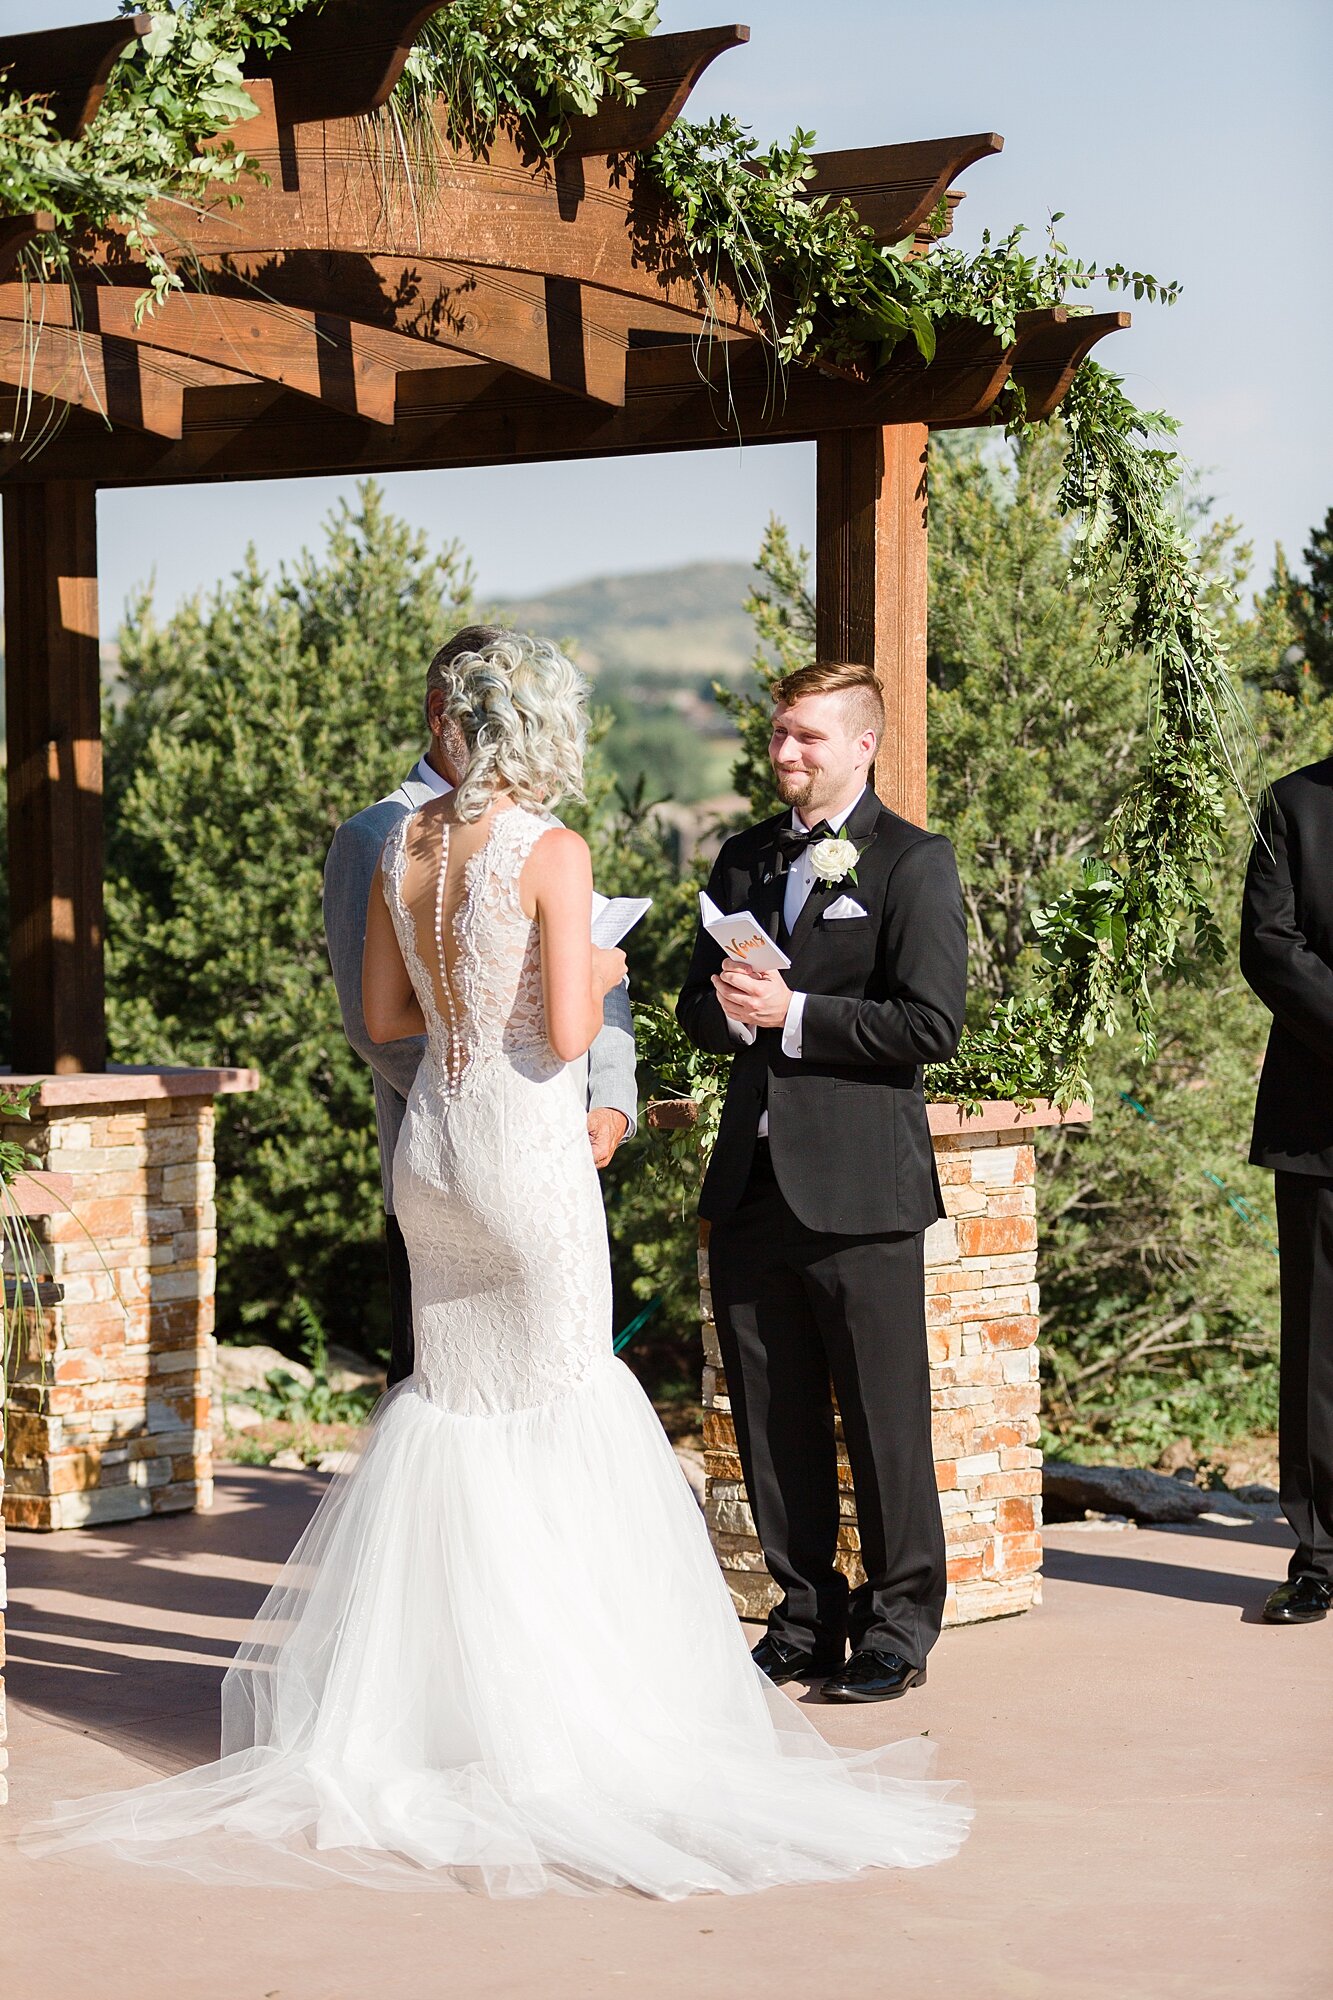 Kristen Vance Photography - Willow Ridge Manor Wedding, Morrison, CO